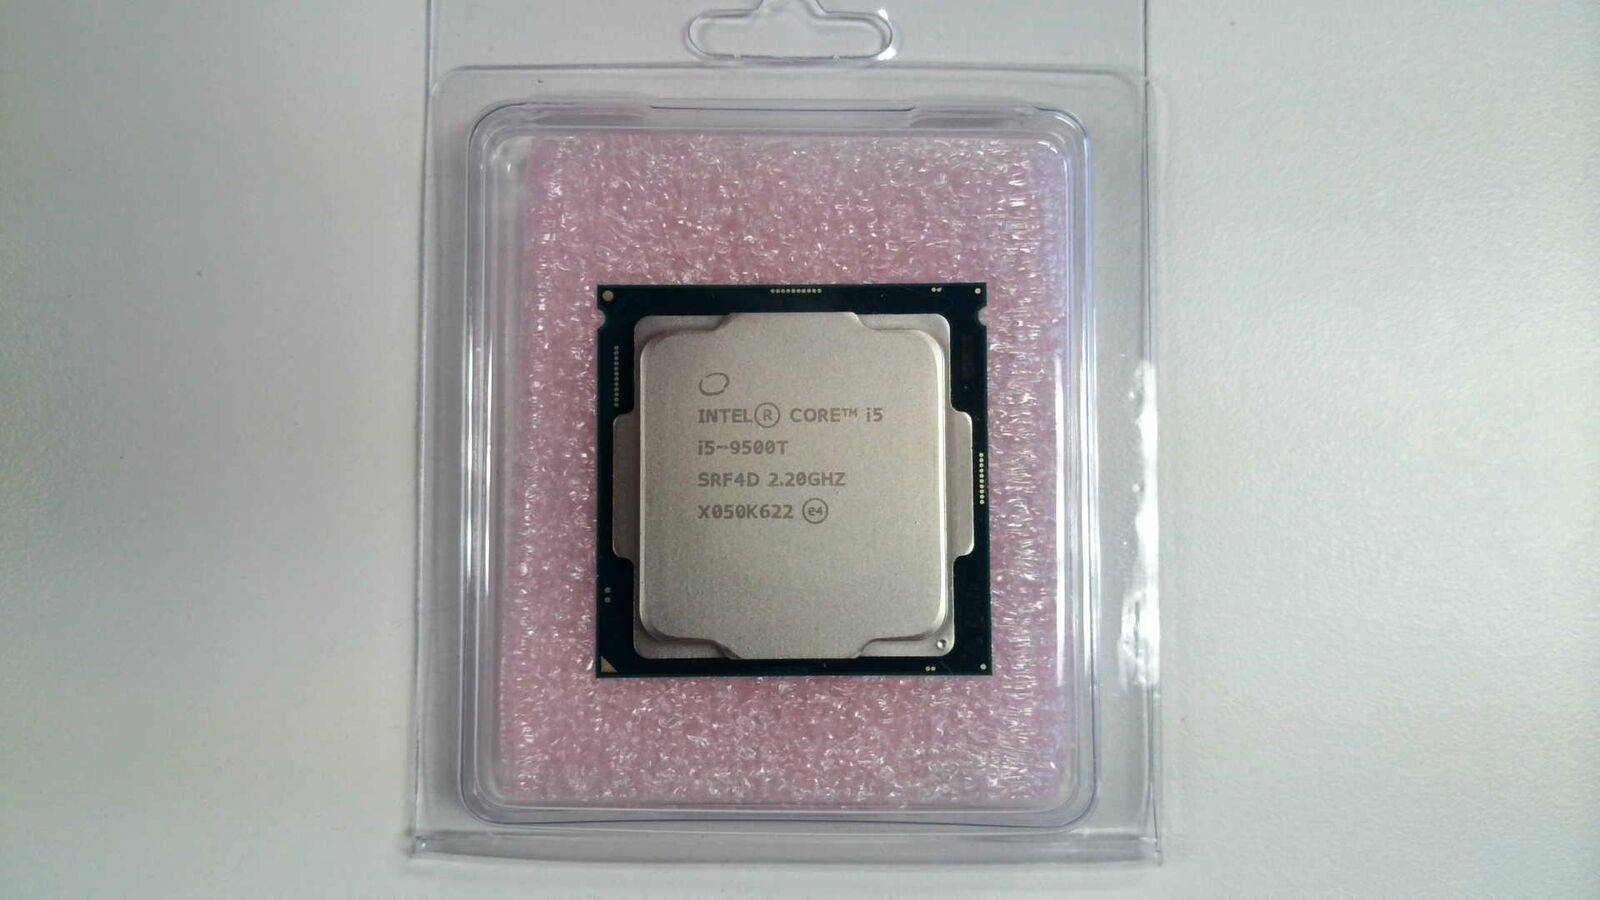 Intel Core i5-9500T SRF4D 2.20GHZ LGA1151 Socket